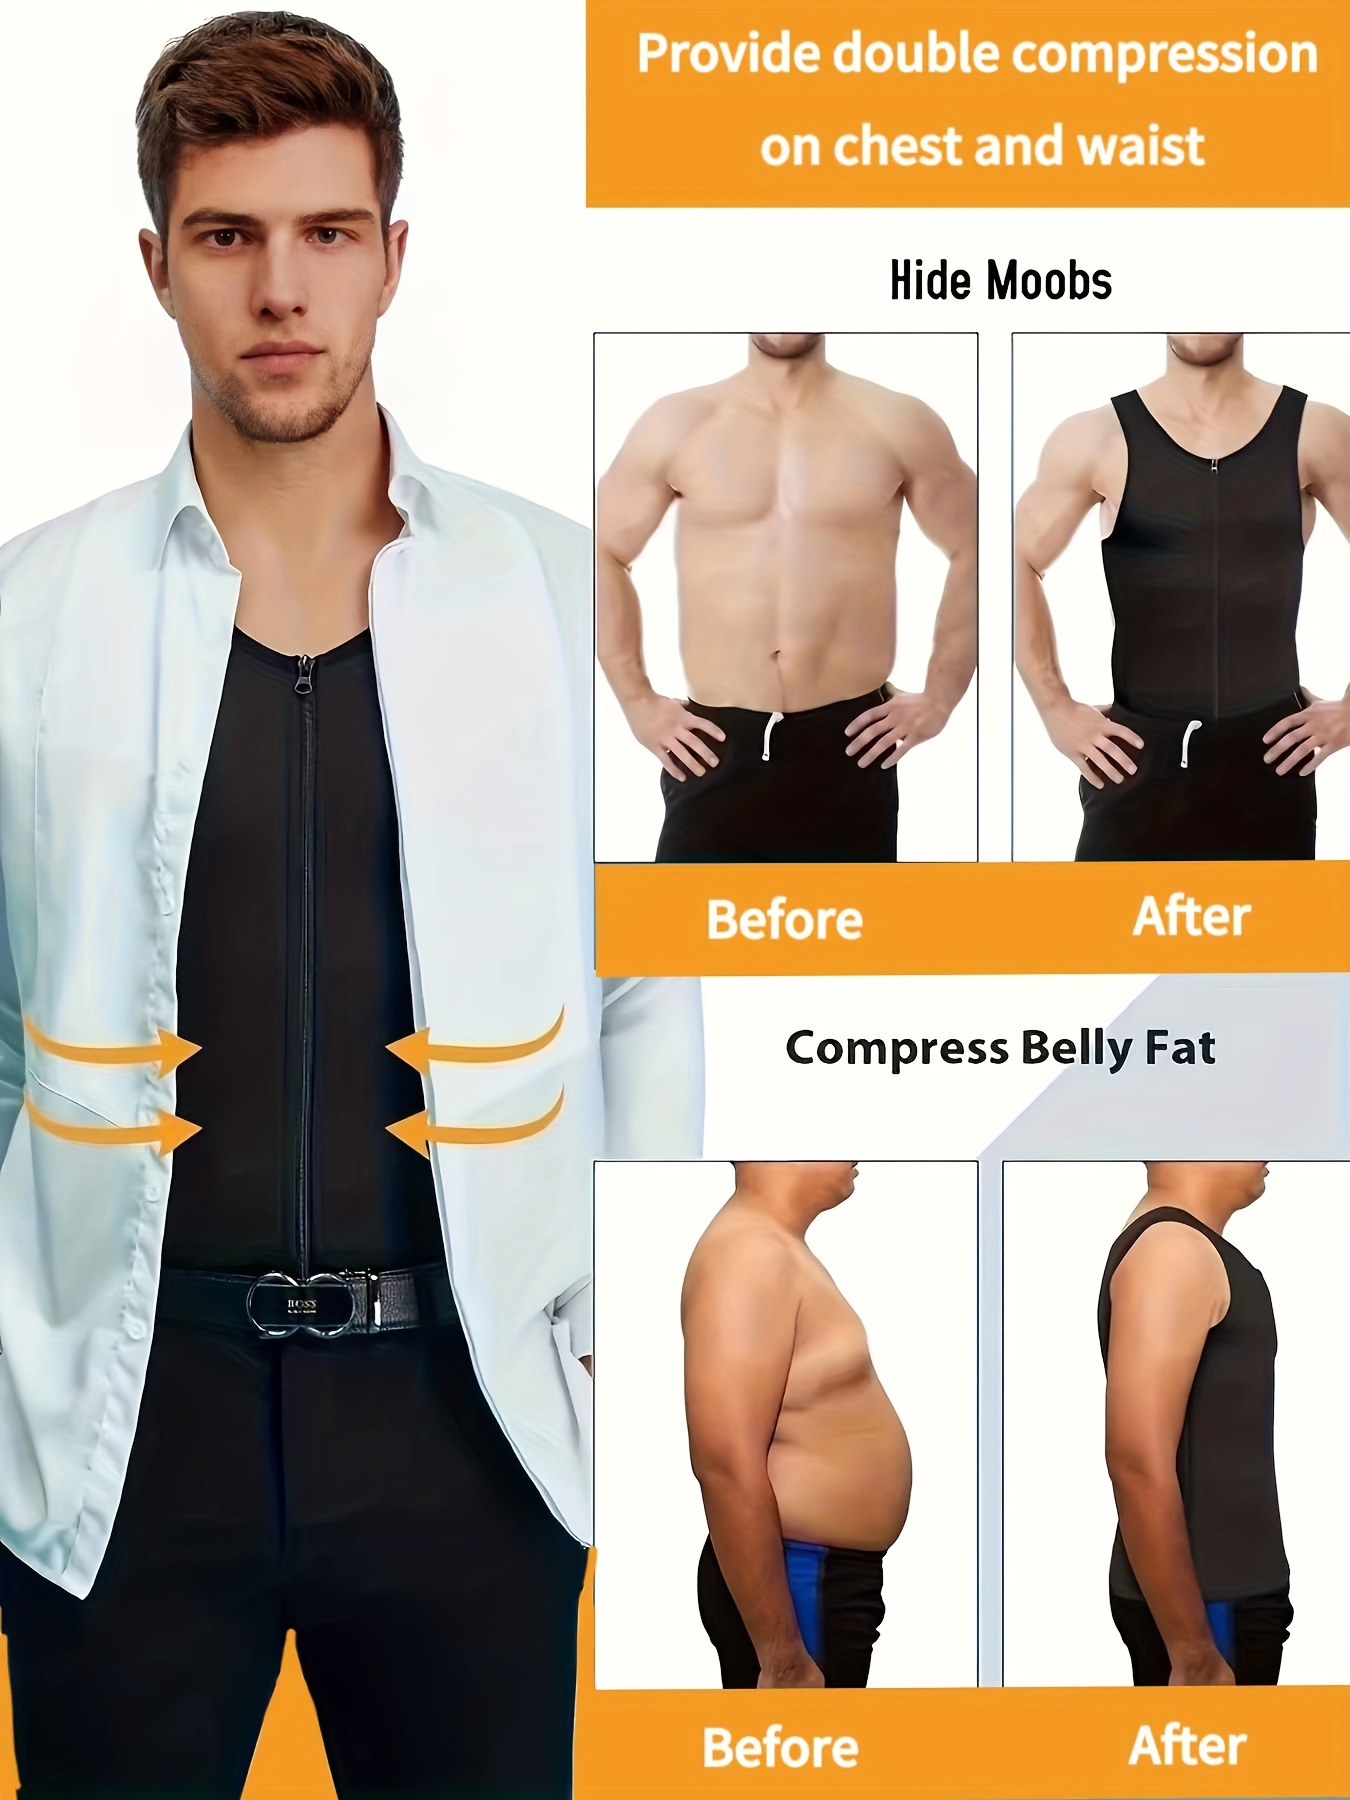 Men Best Slimming Body Shaper T-Shirt Tummy Control Tank Male Corset Girdle  Top